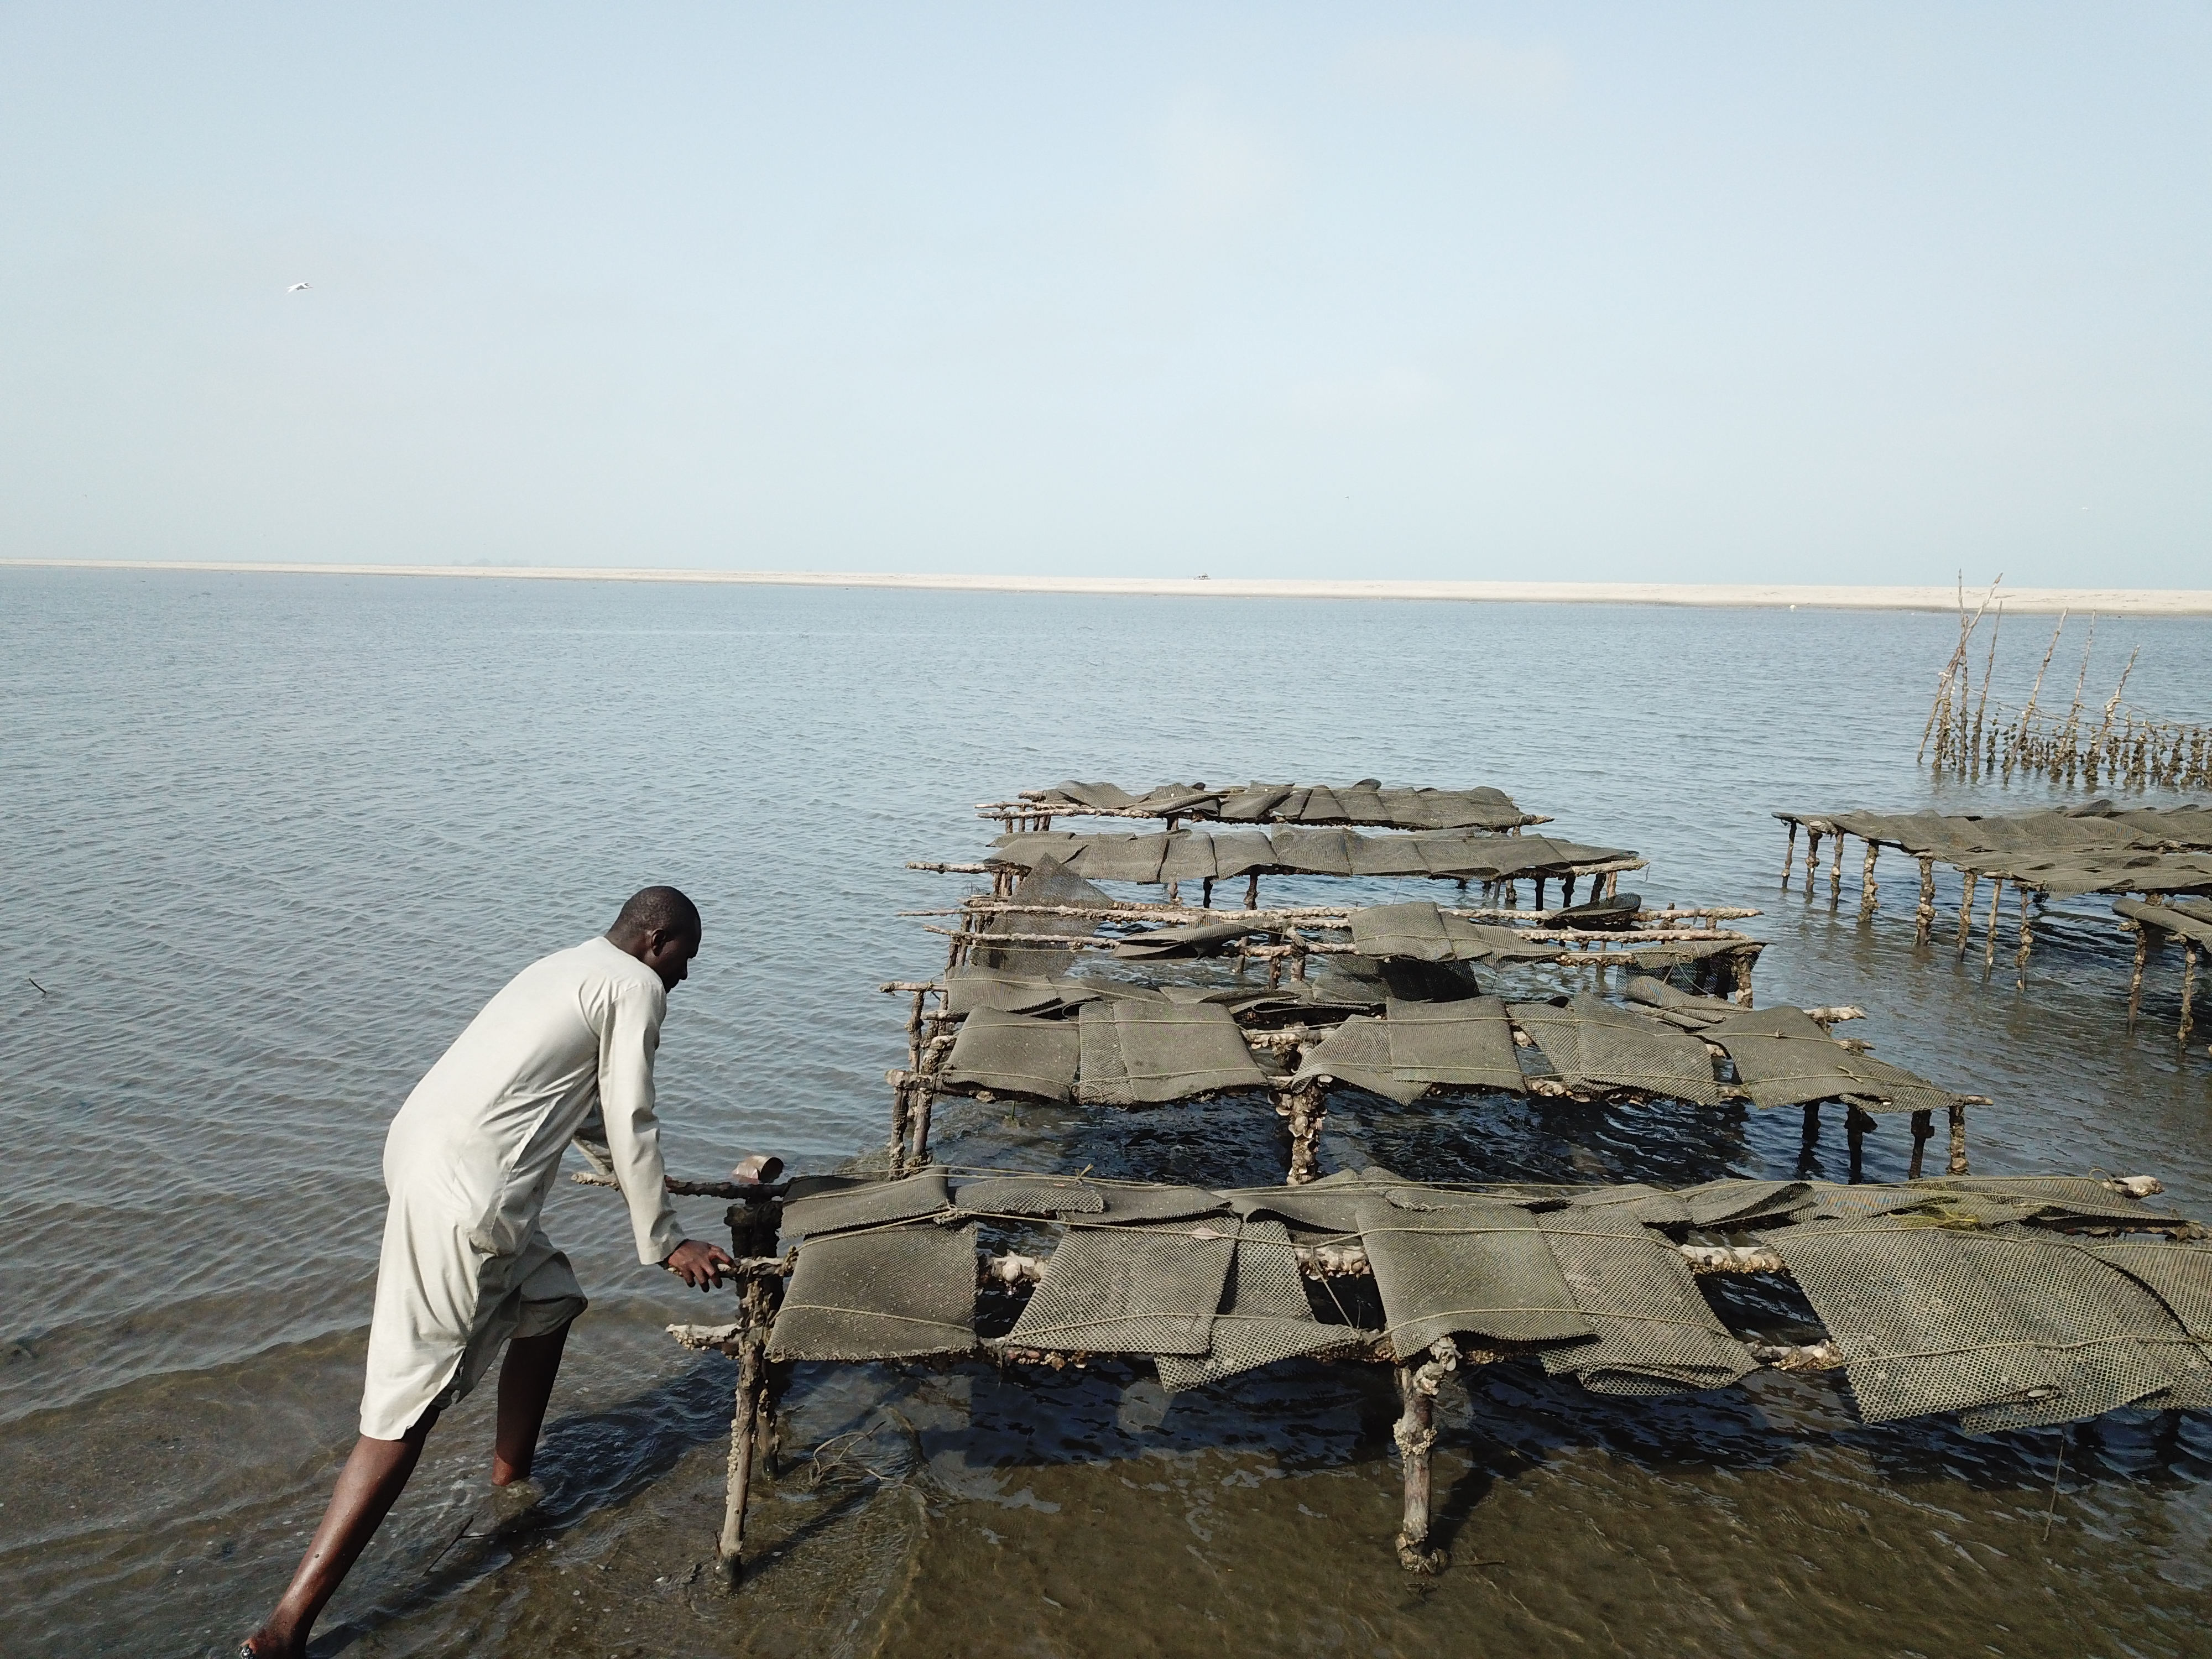 Oyster cultivation training in the Dionewar commune in Senegal’s Fatick region. Photo taken by Yakhya Gueye.